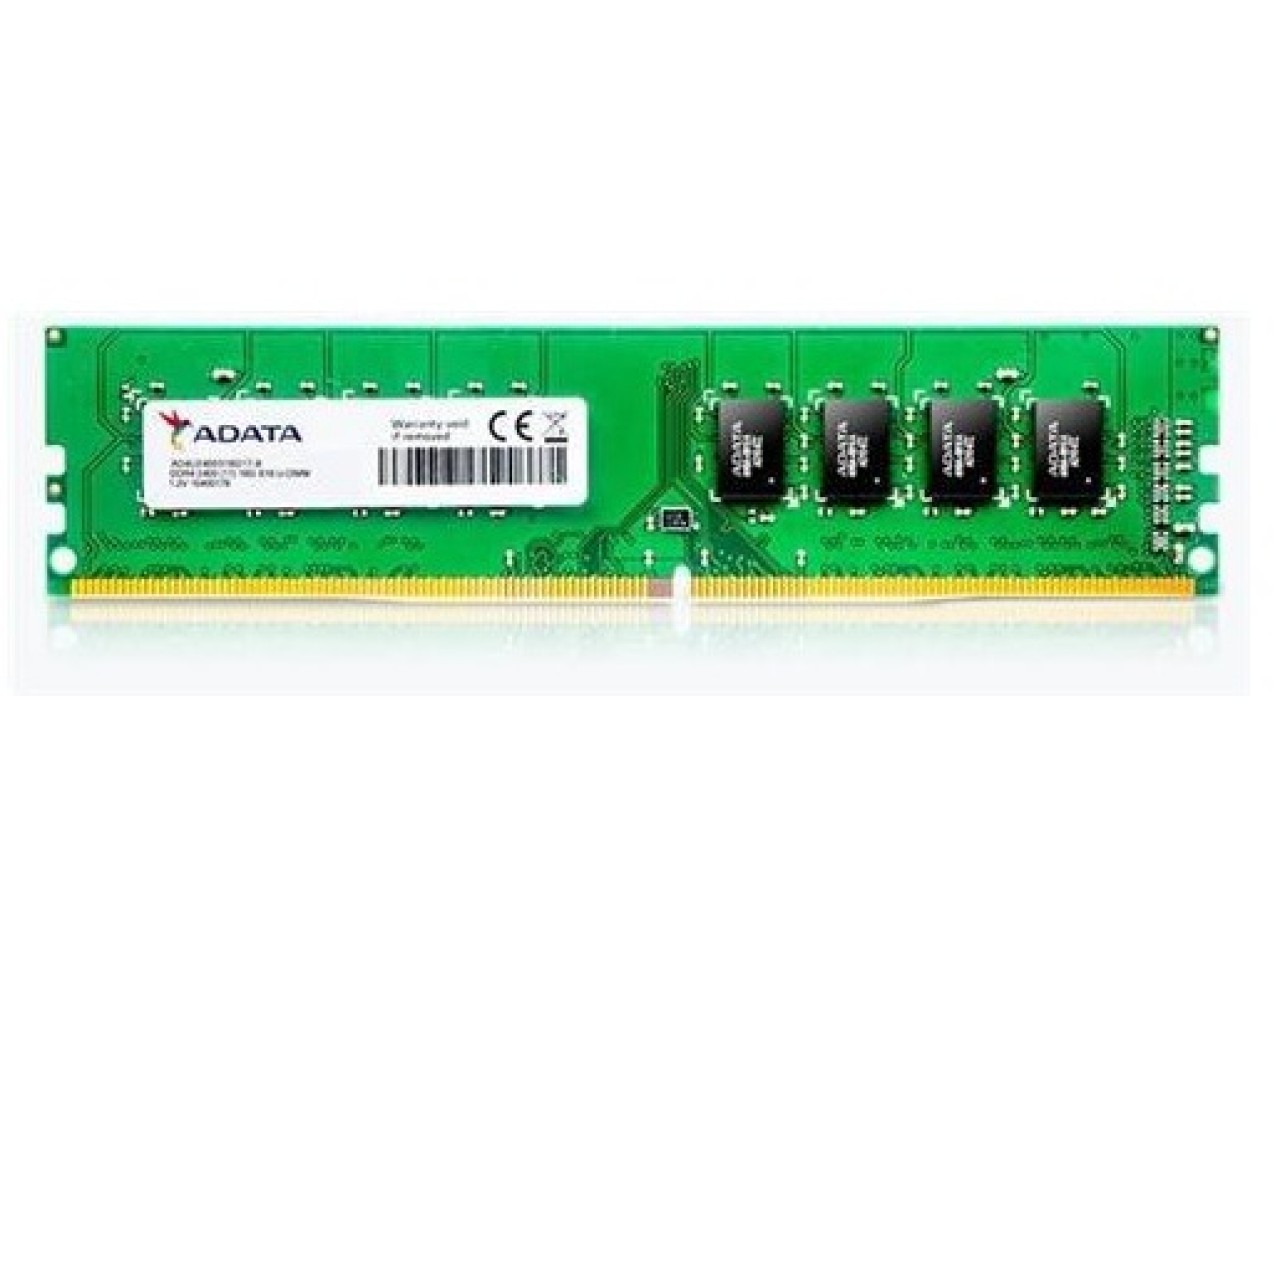 Adata Premier DDR4 2666 RAM For Laptops - 4 GB